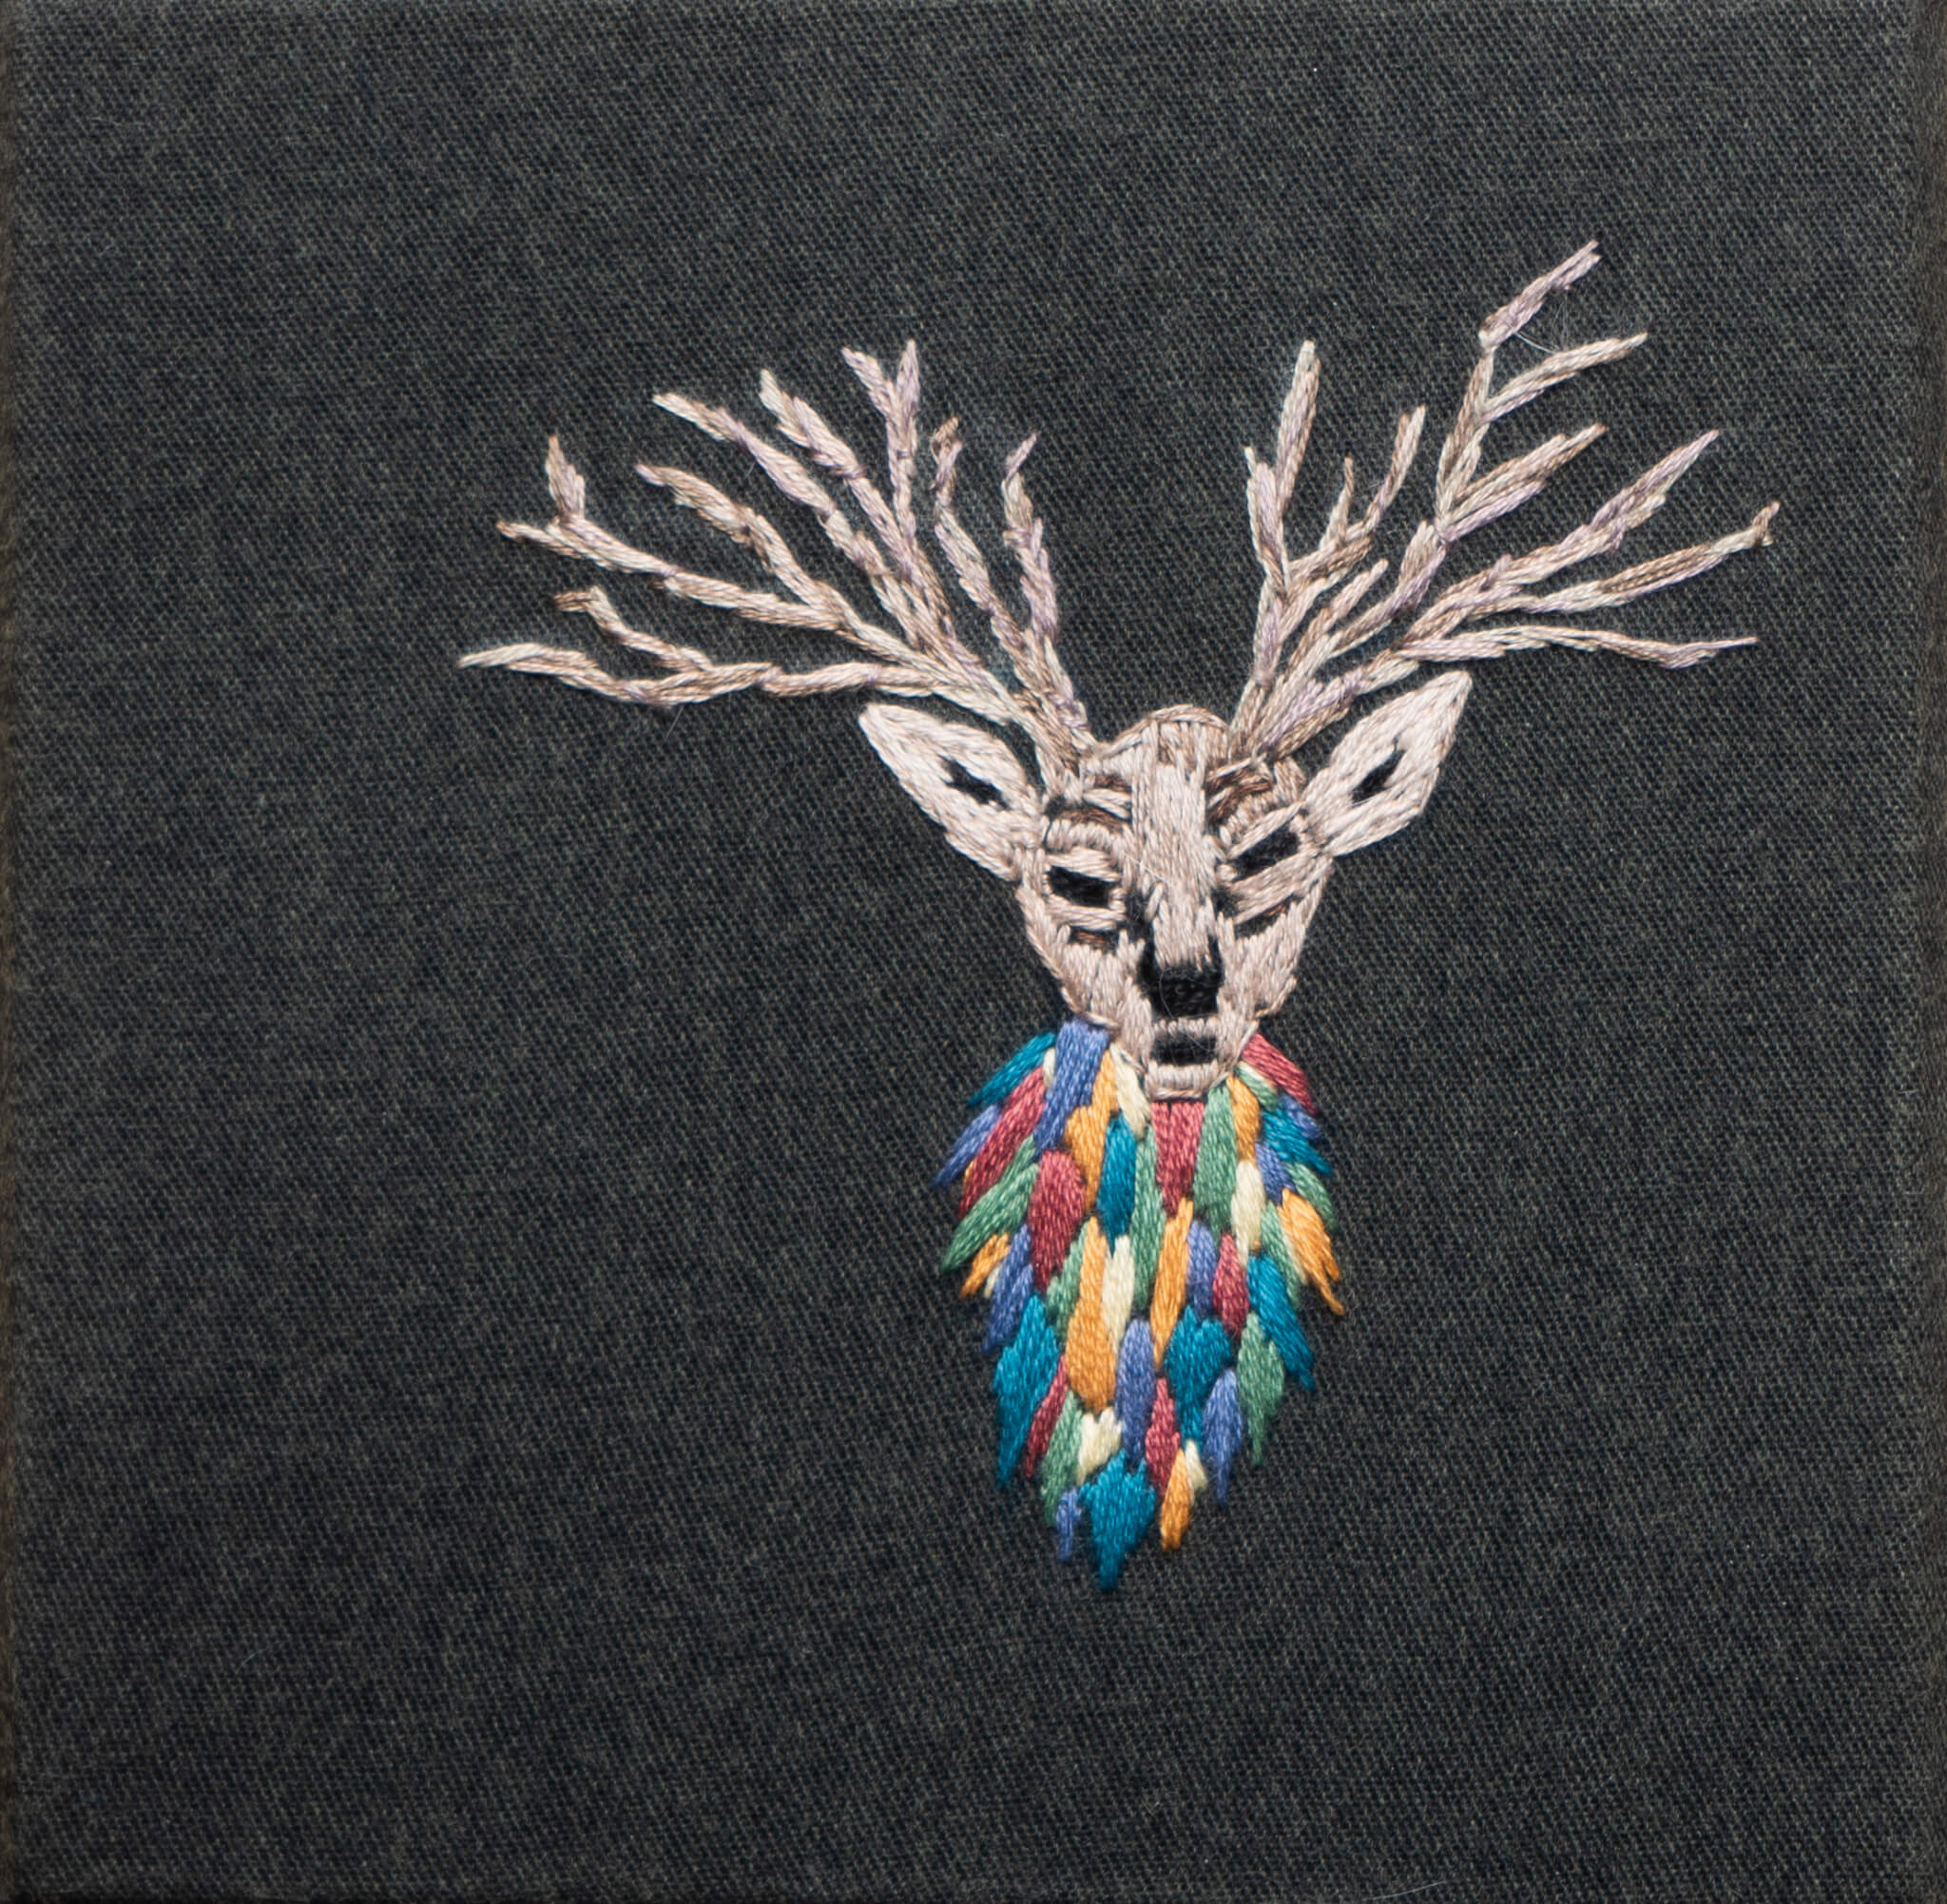 Embroidery – Cindy Dach